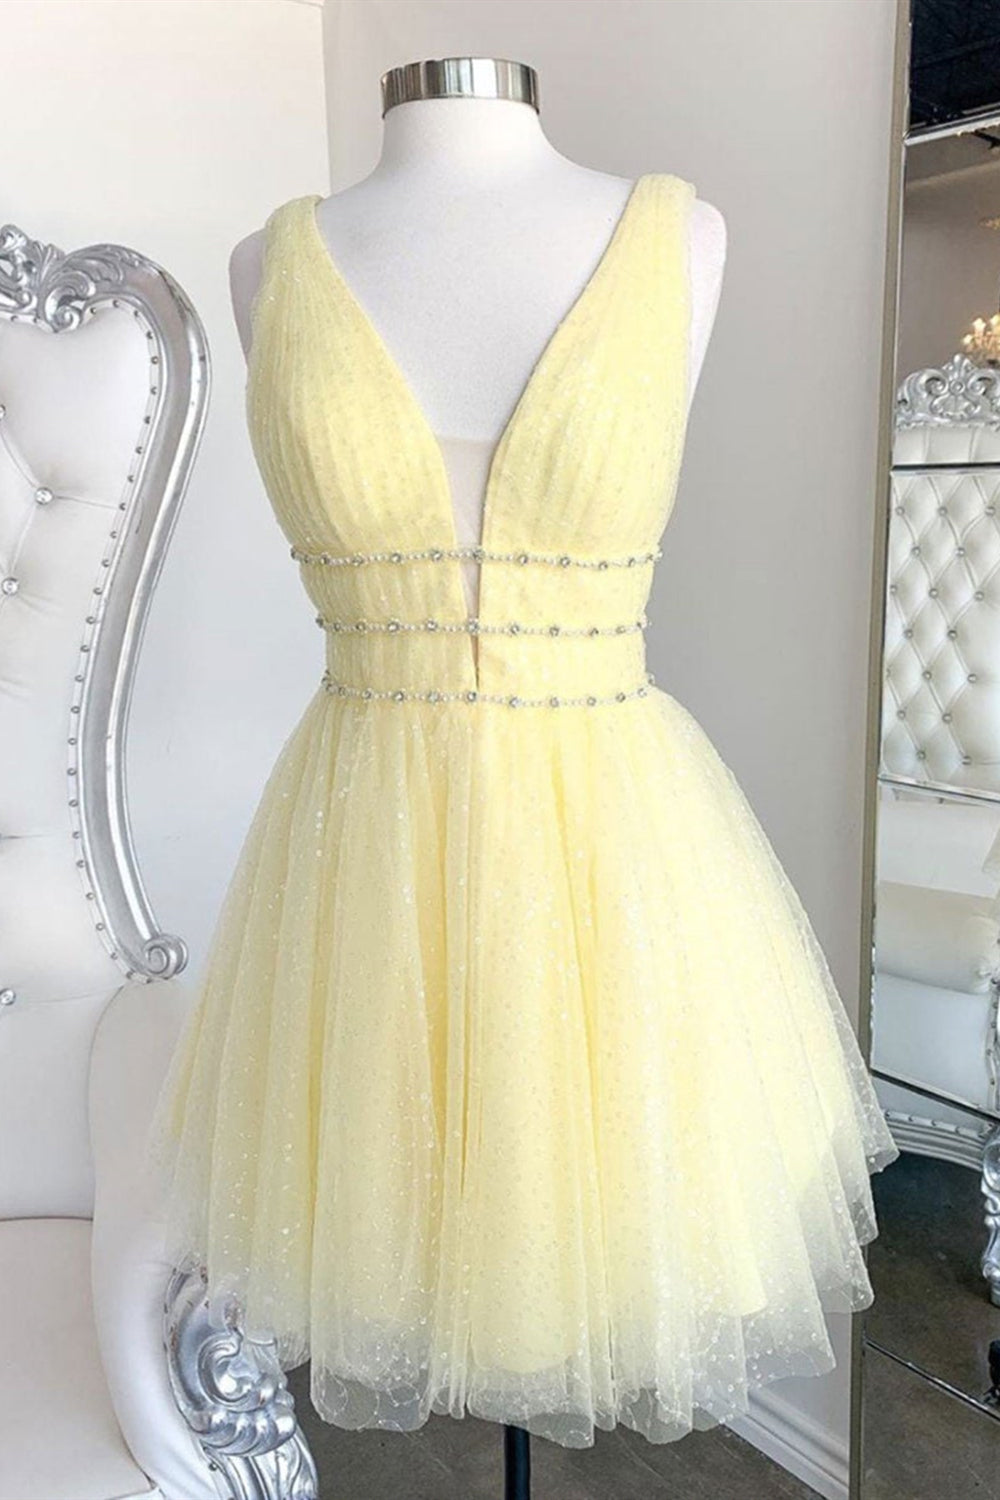 V Neck Open Back Yellow Tulle Short Prom Dresses, V Neck Yellow Homecoming Dresses, Yellow Formal Evening Dresses